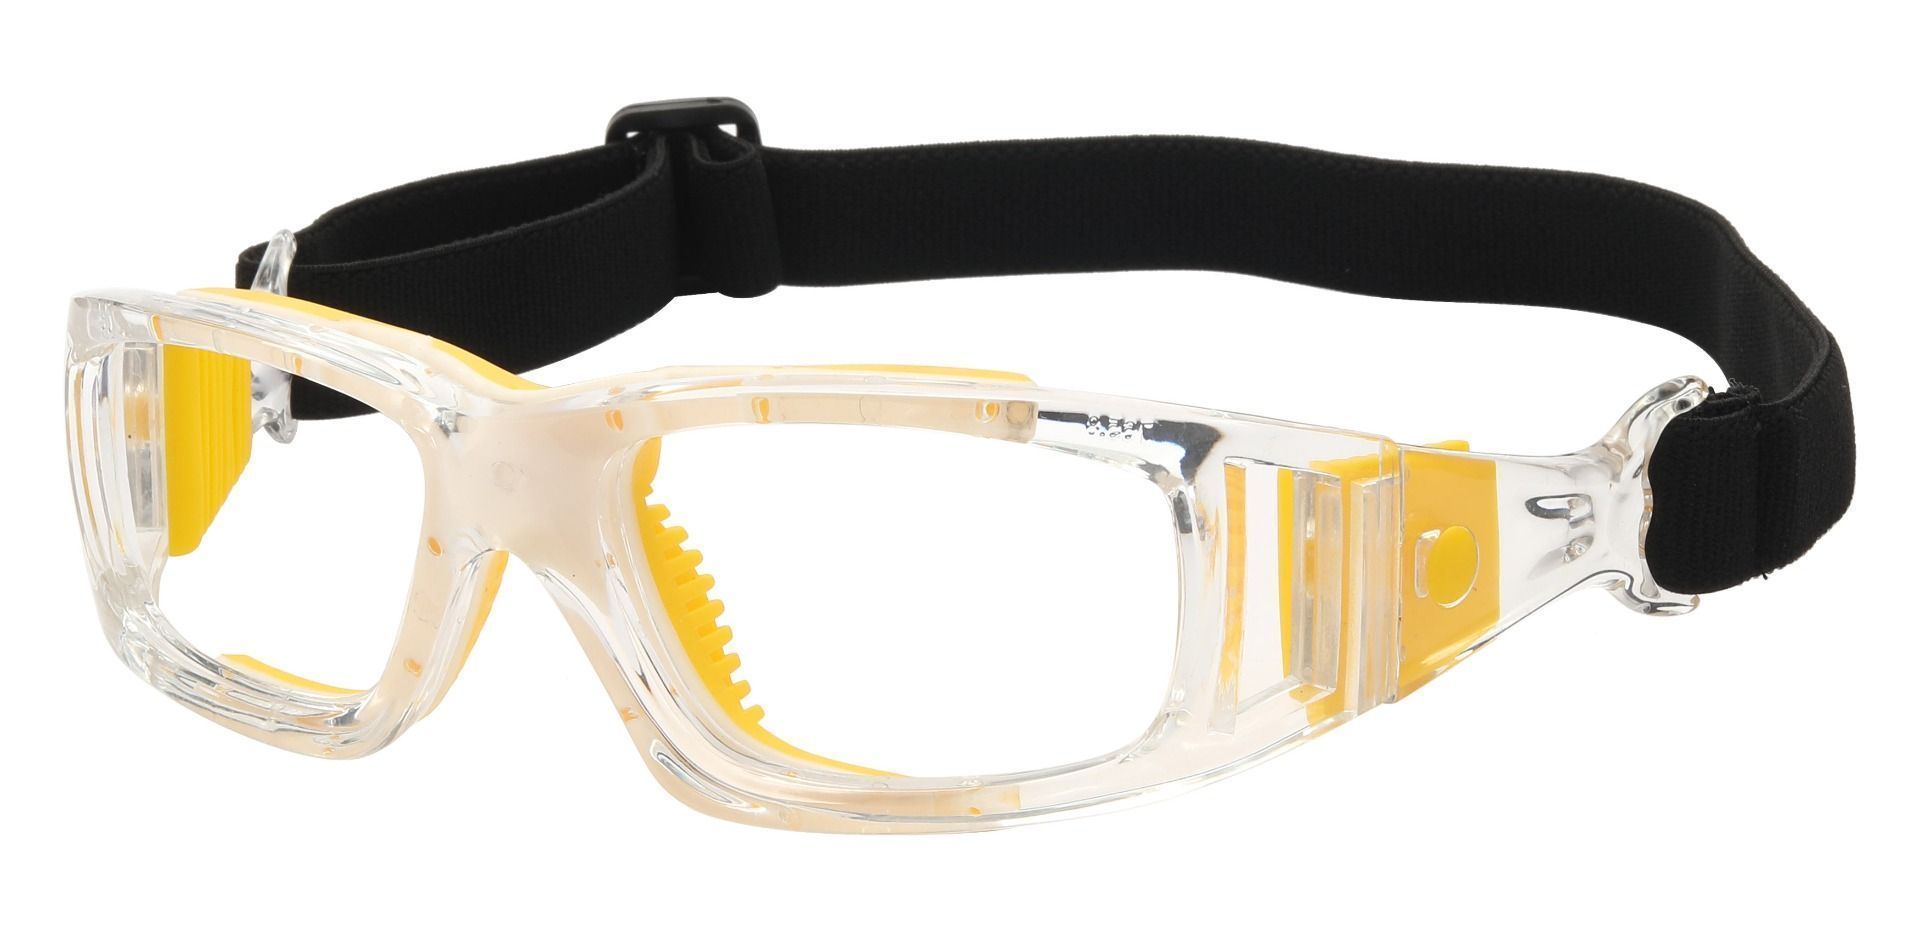 Heller Sports Goggles Prescription Glasses - Clear